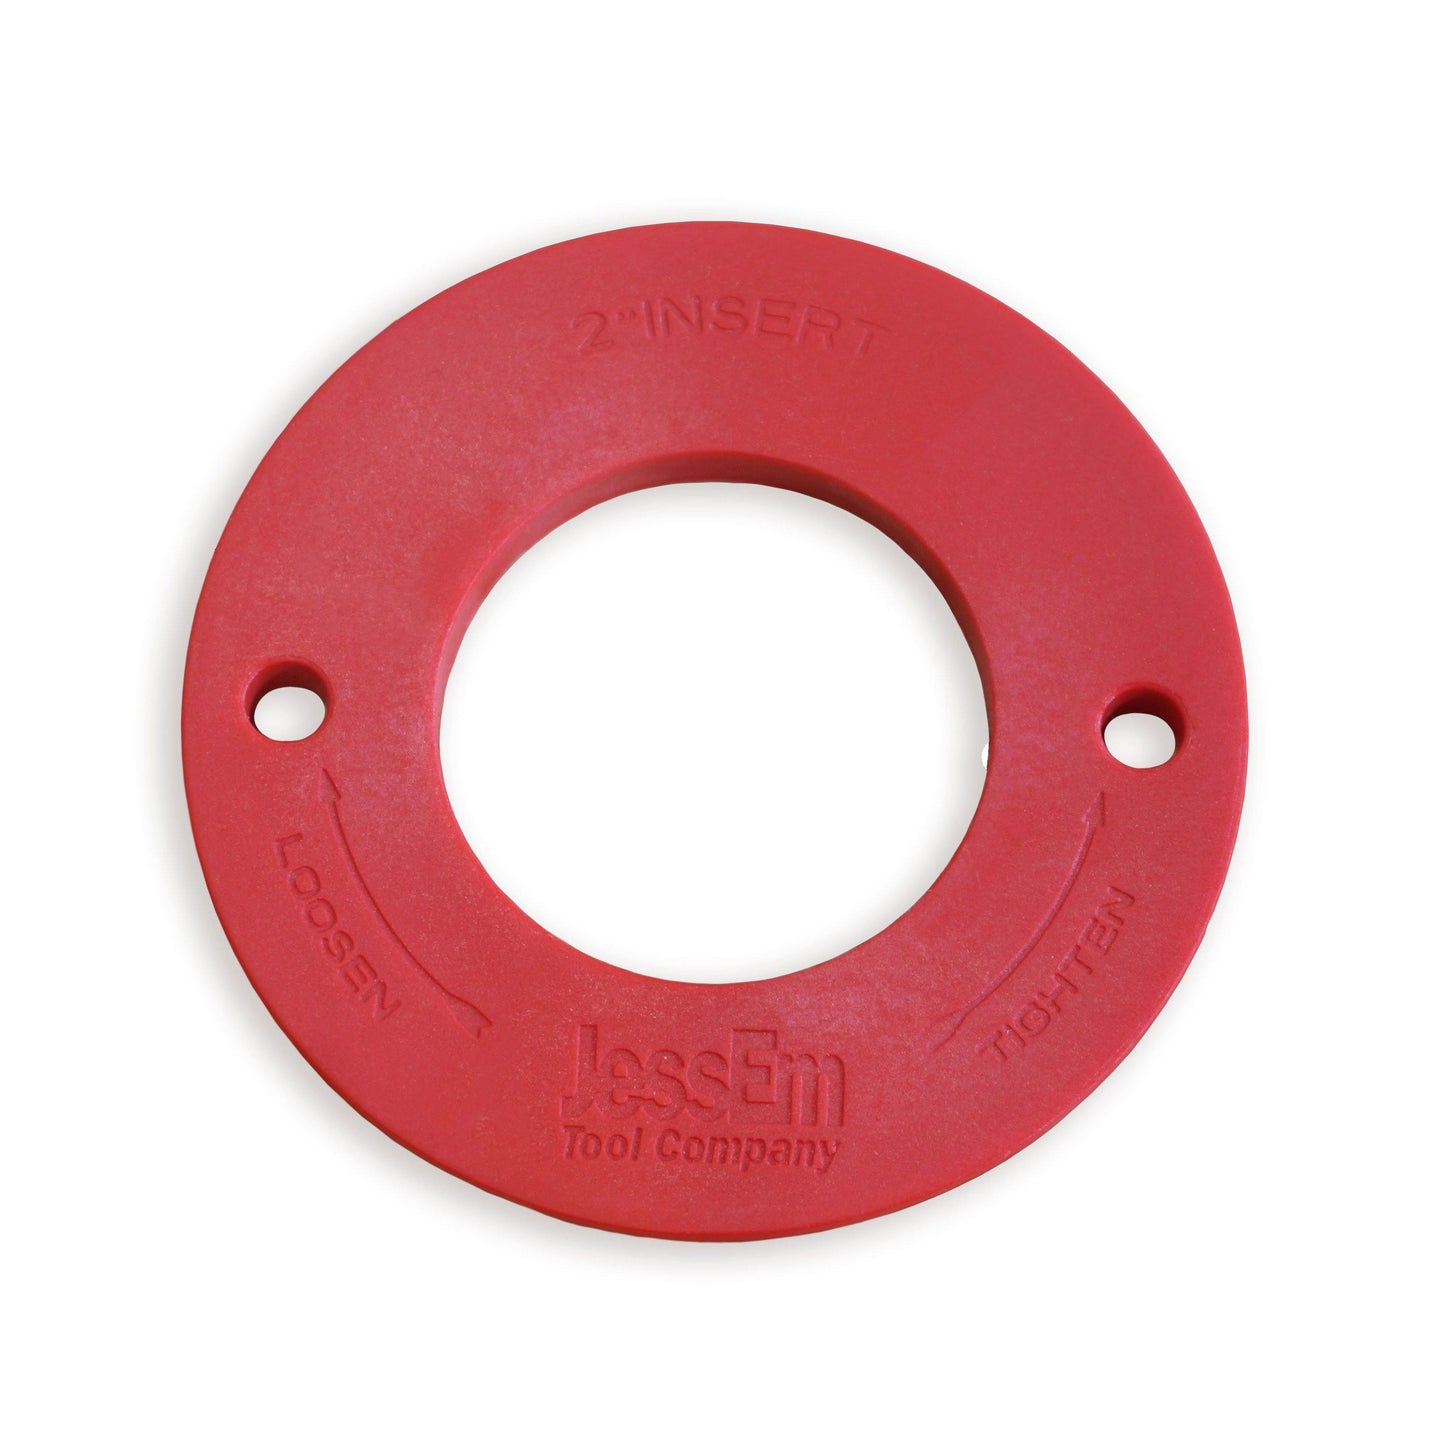 2" Insert Ring - JessEm Tool Company